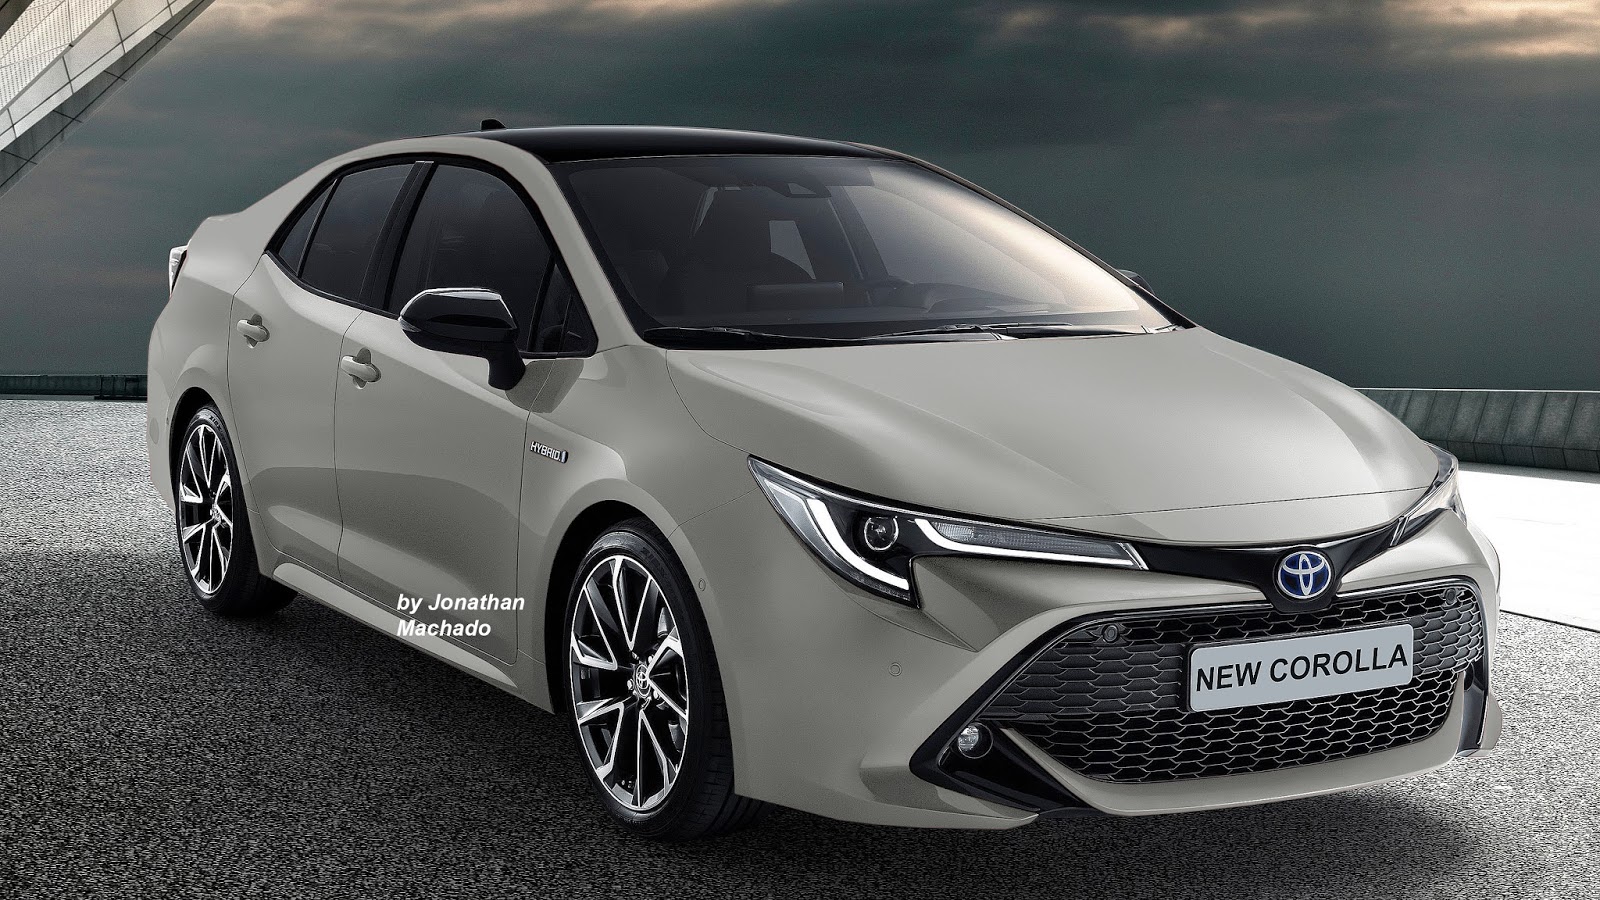 Next-gen 2019 Toyota Corolla Altis (2019 Toyota Corolla Sedan) imagined